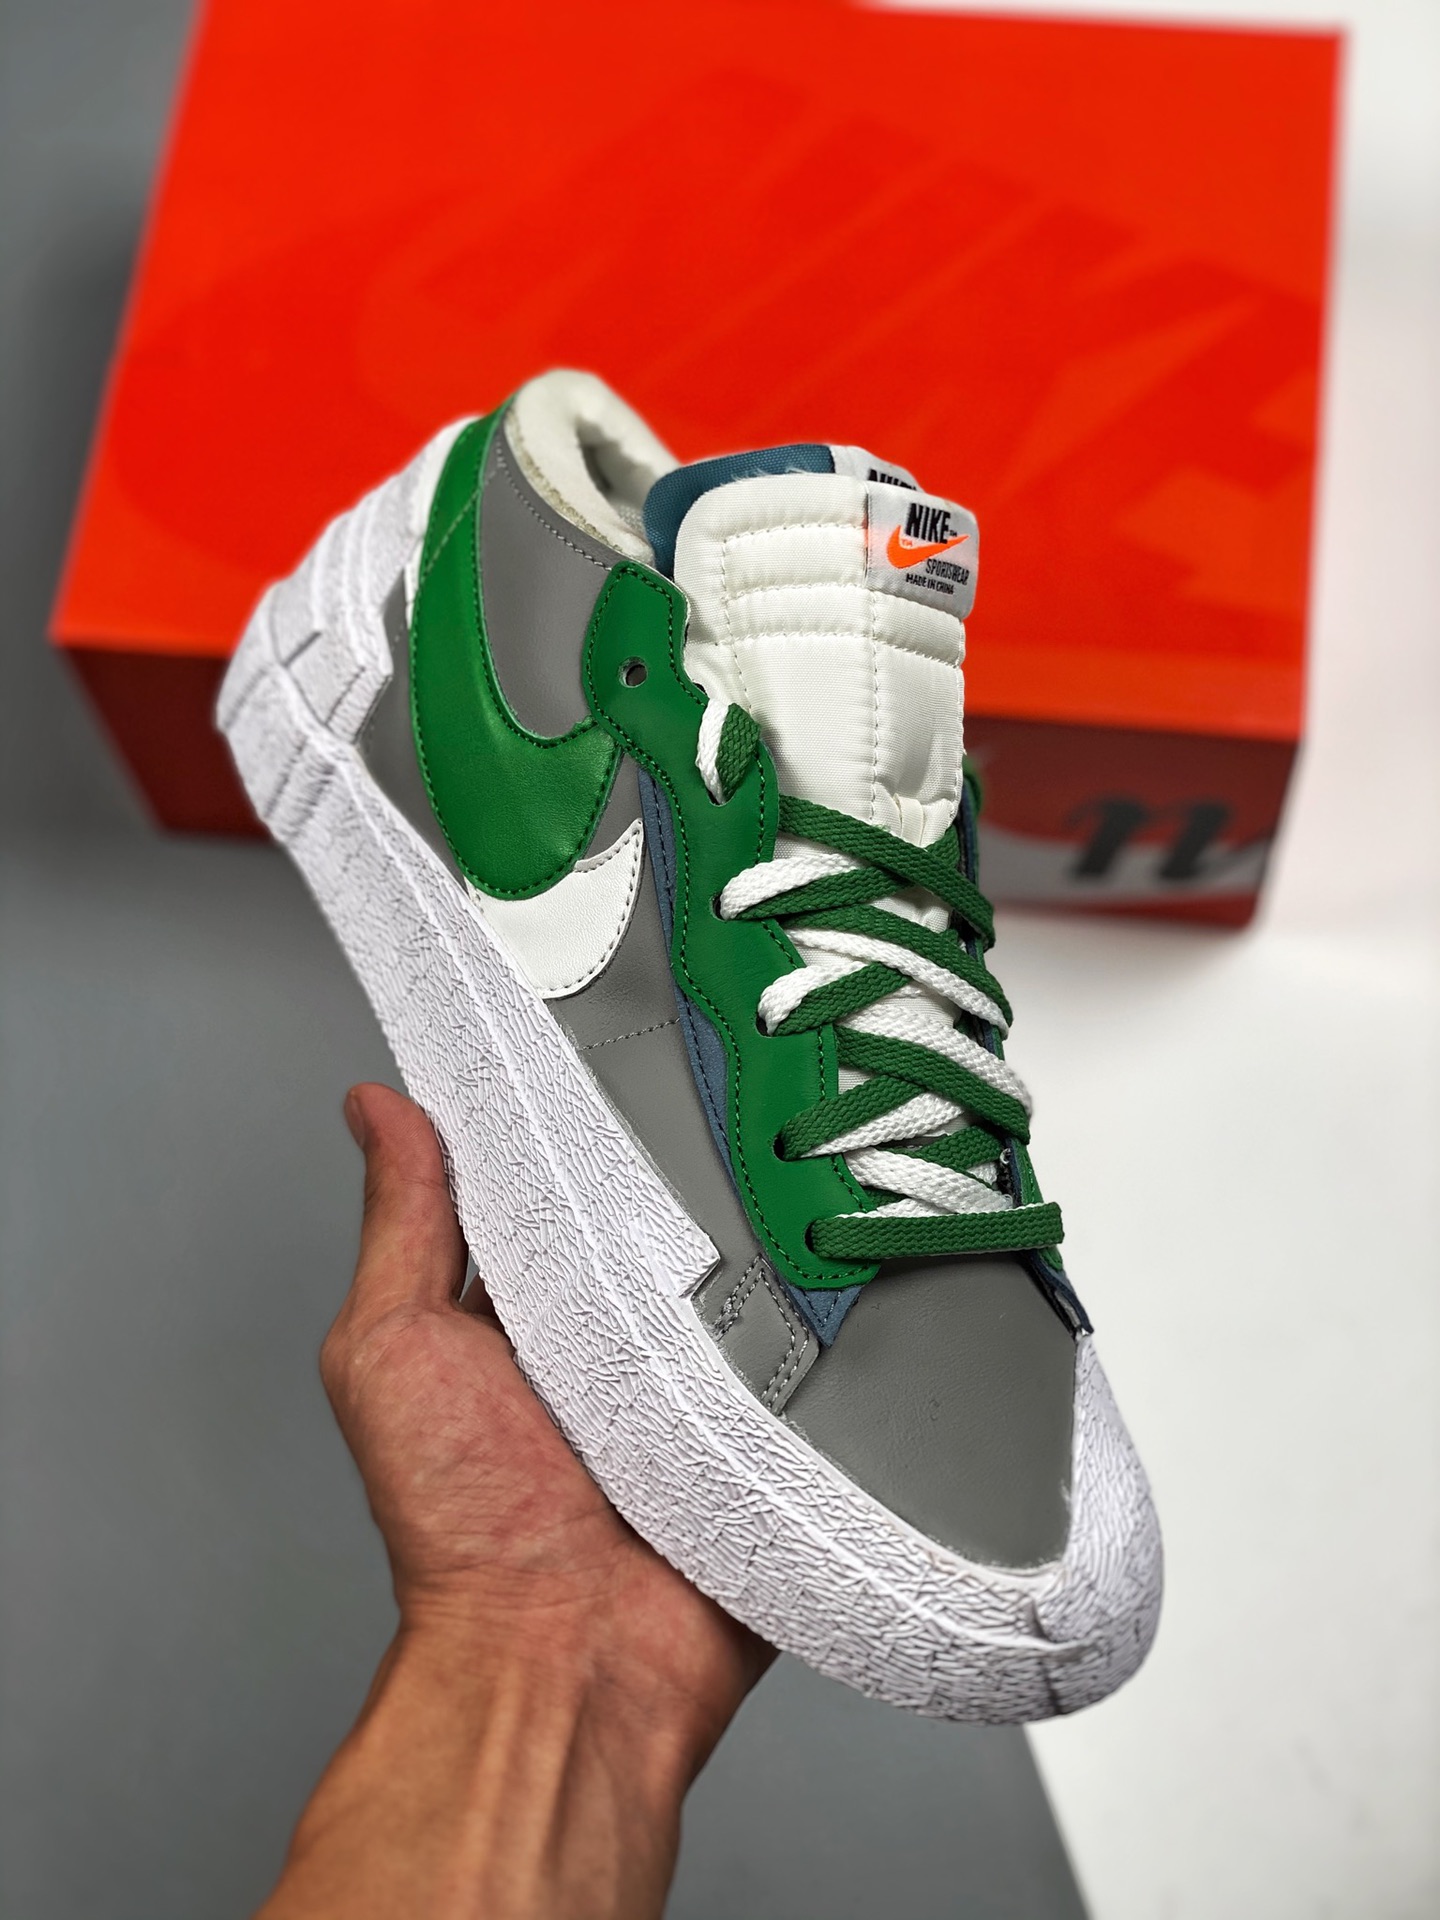 Sacai x Nike Blazer Low Medium Grey/Classic Green-White Shoes